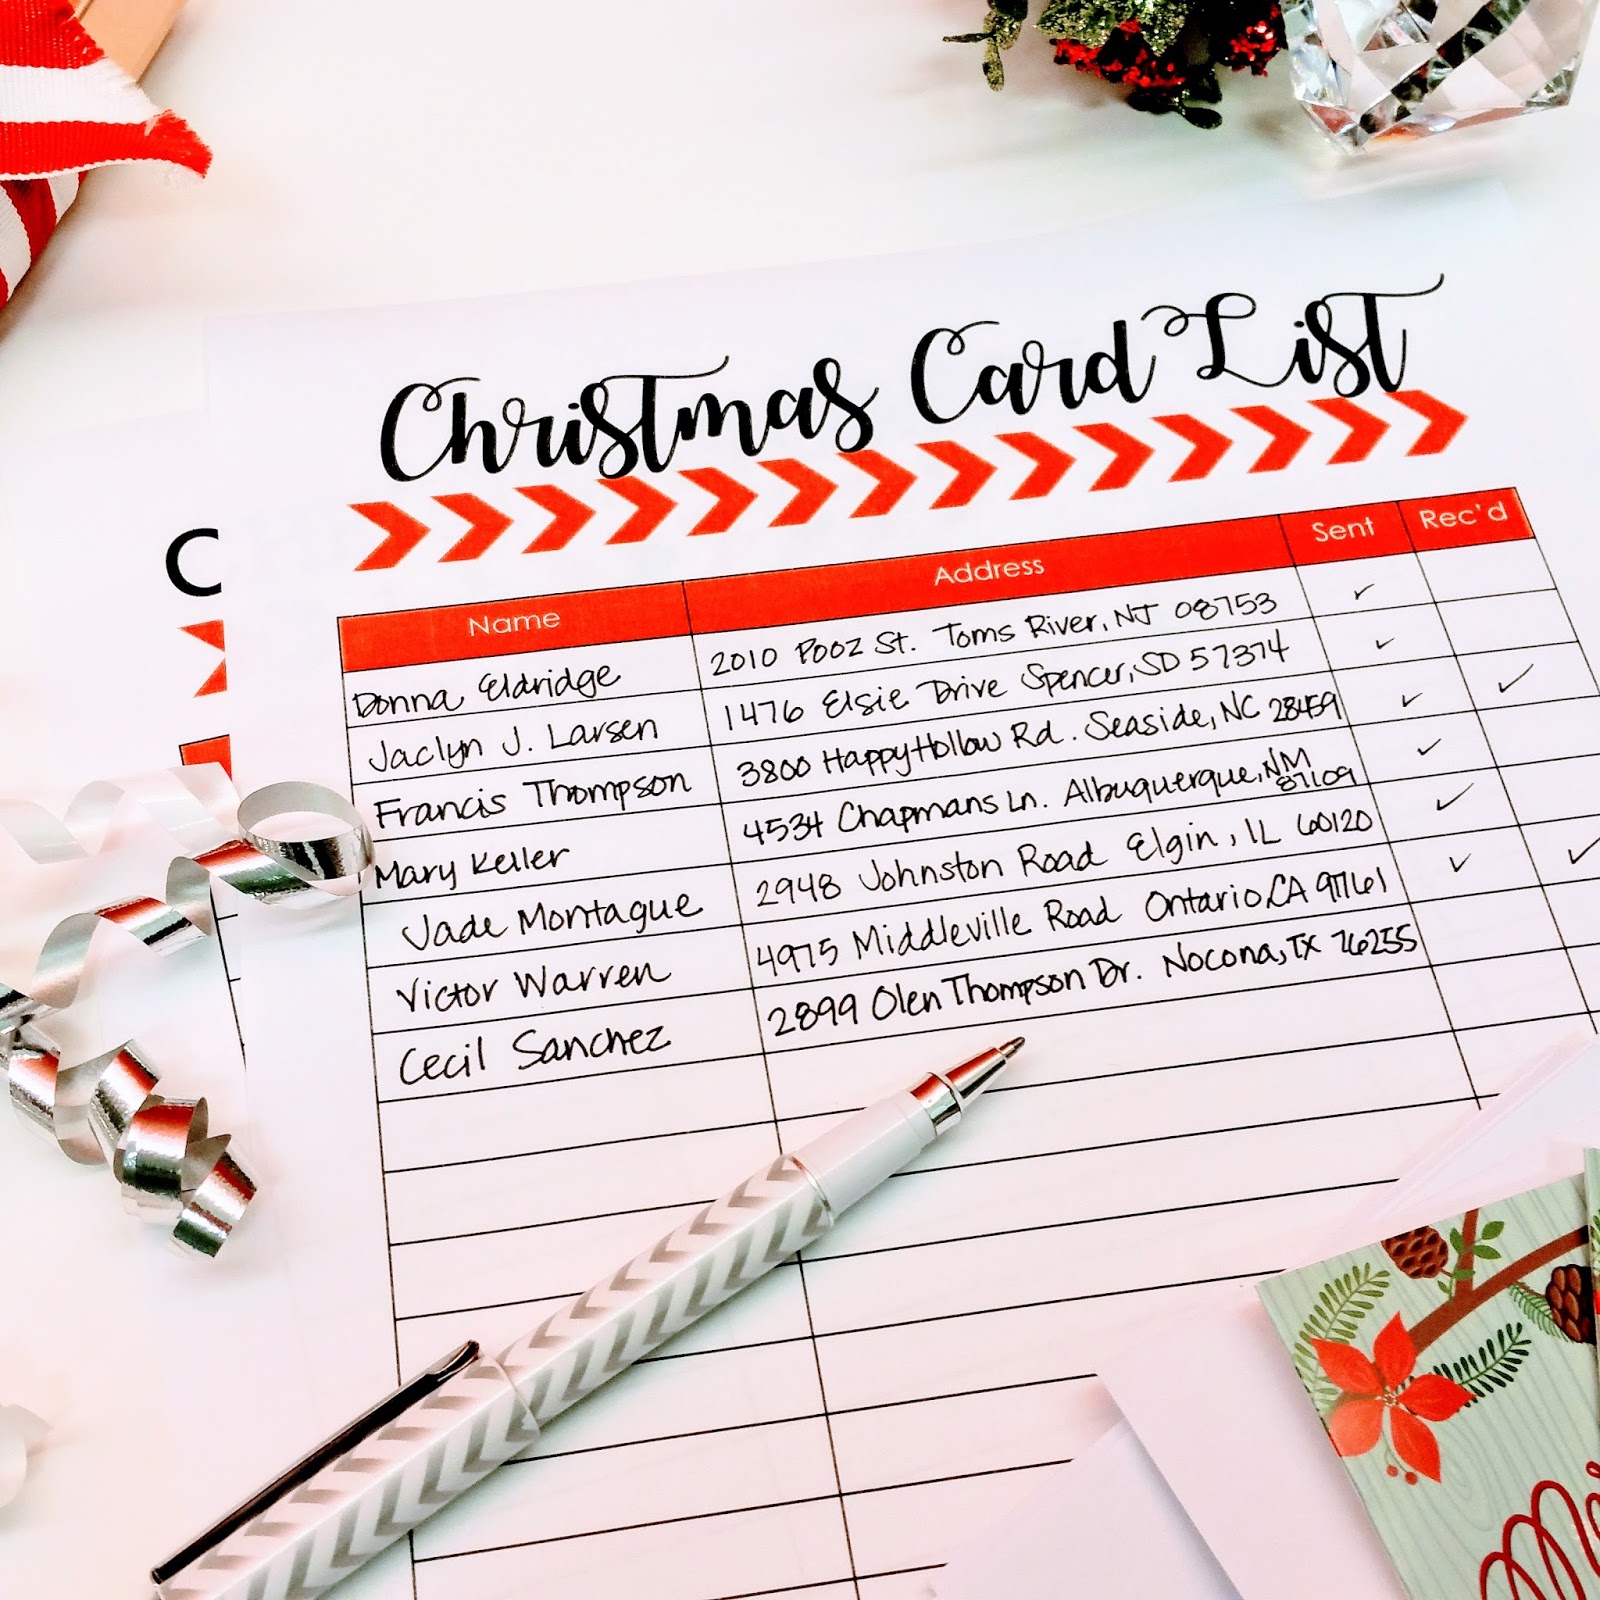 cupcake-wishes-birthday-dreams-christmas-card-list-and-tracker-printable